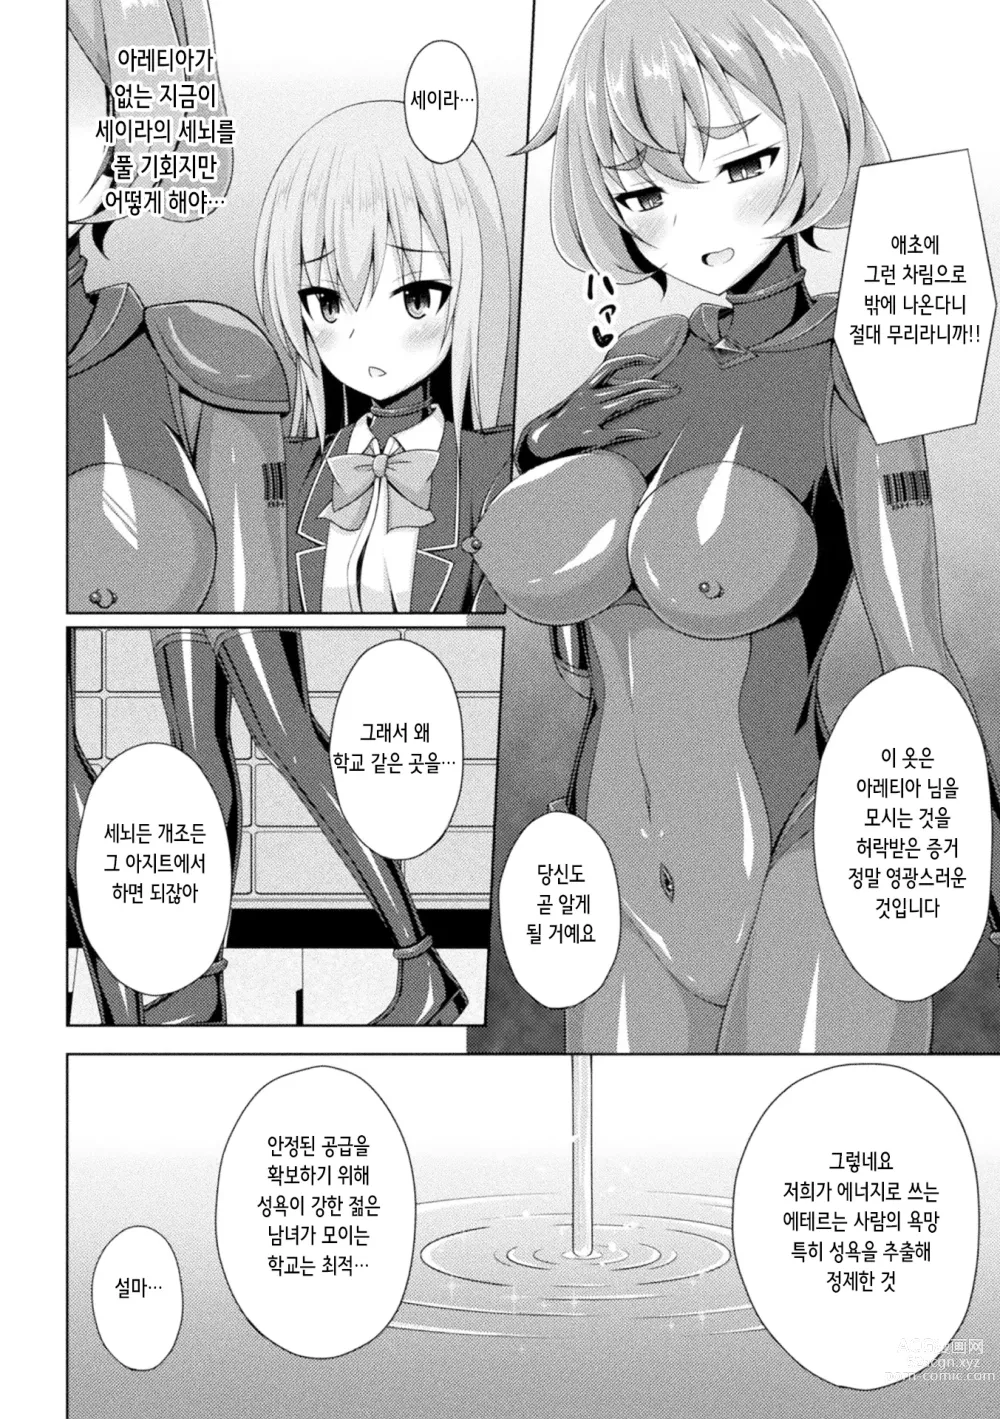 Page 2 of manga 황옥천희 글리터 스타즈 ep3